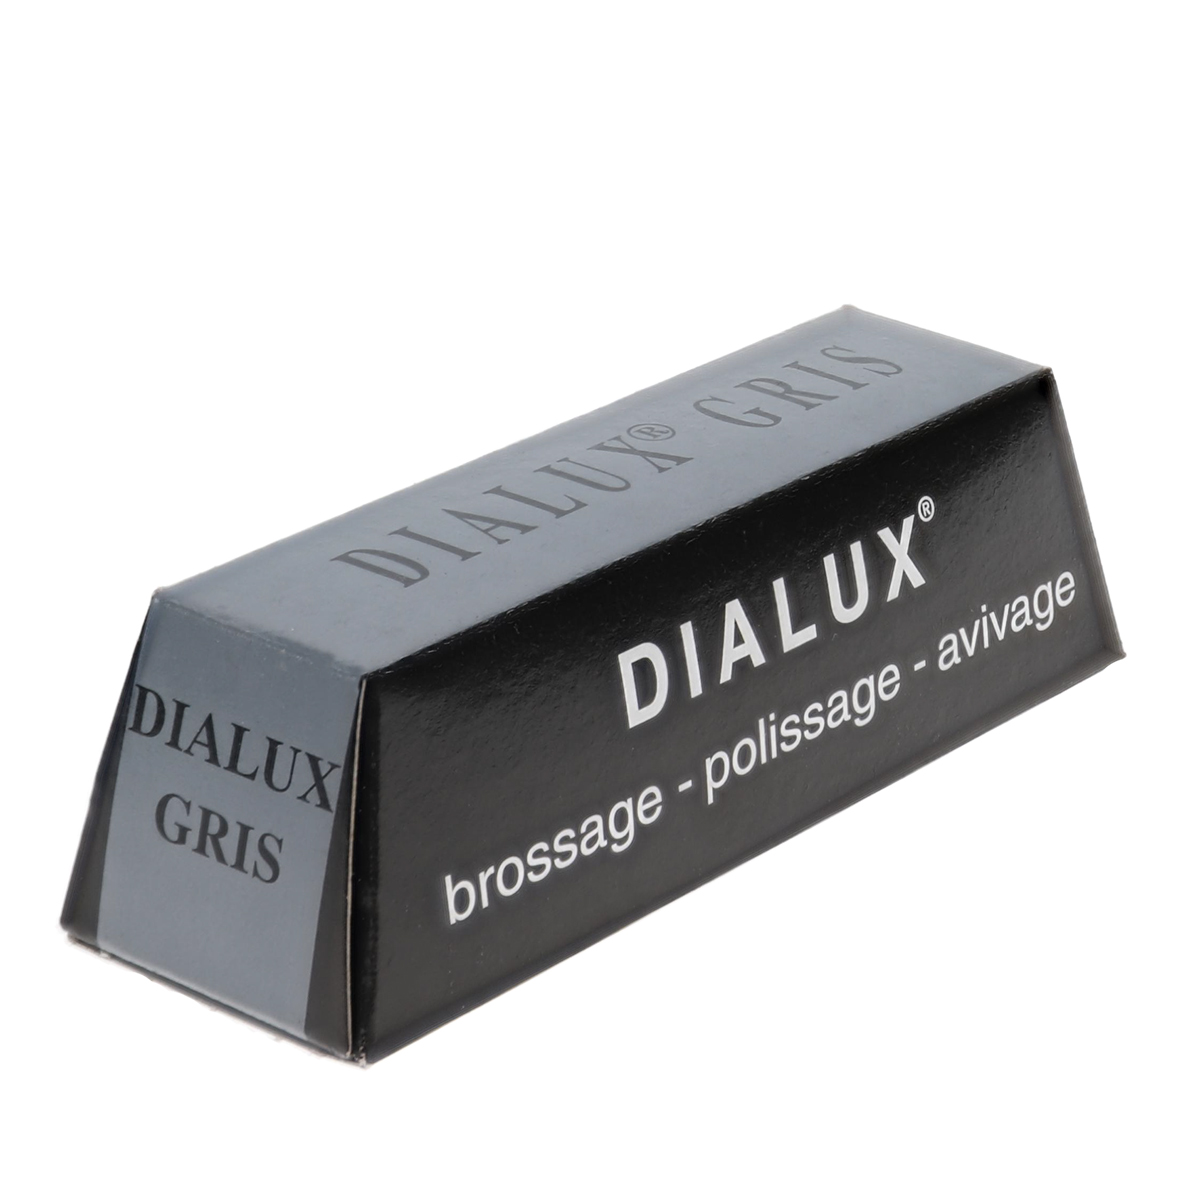 Dialux polishing paste grey